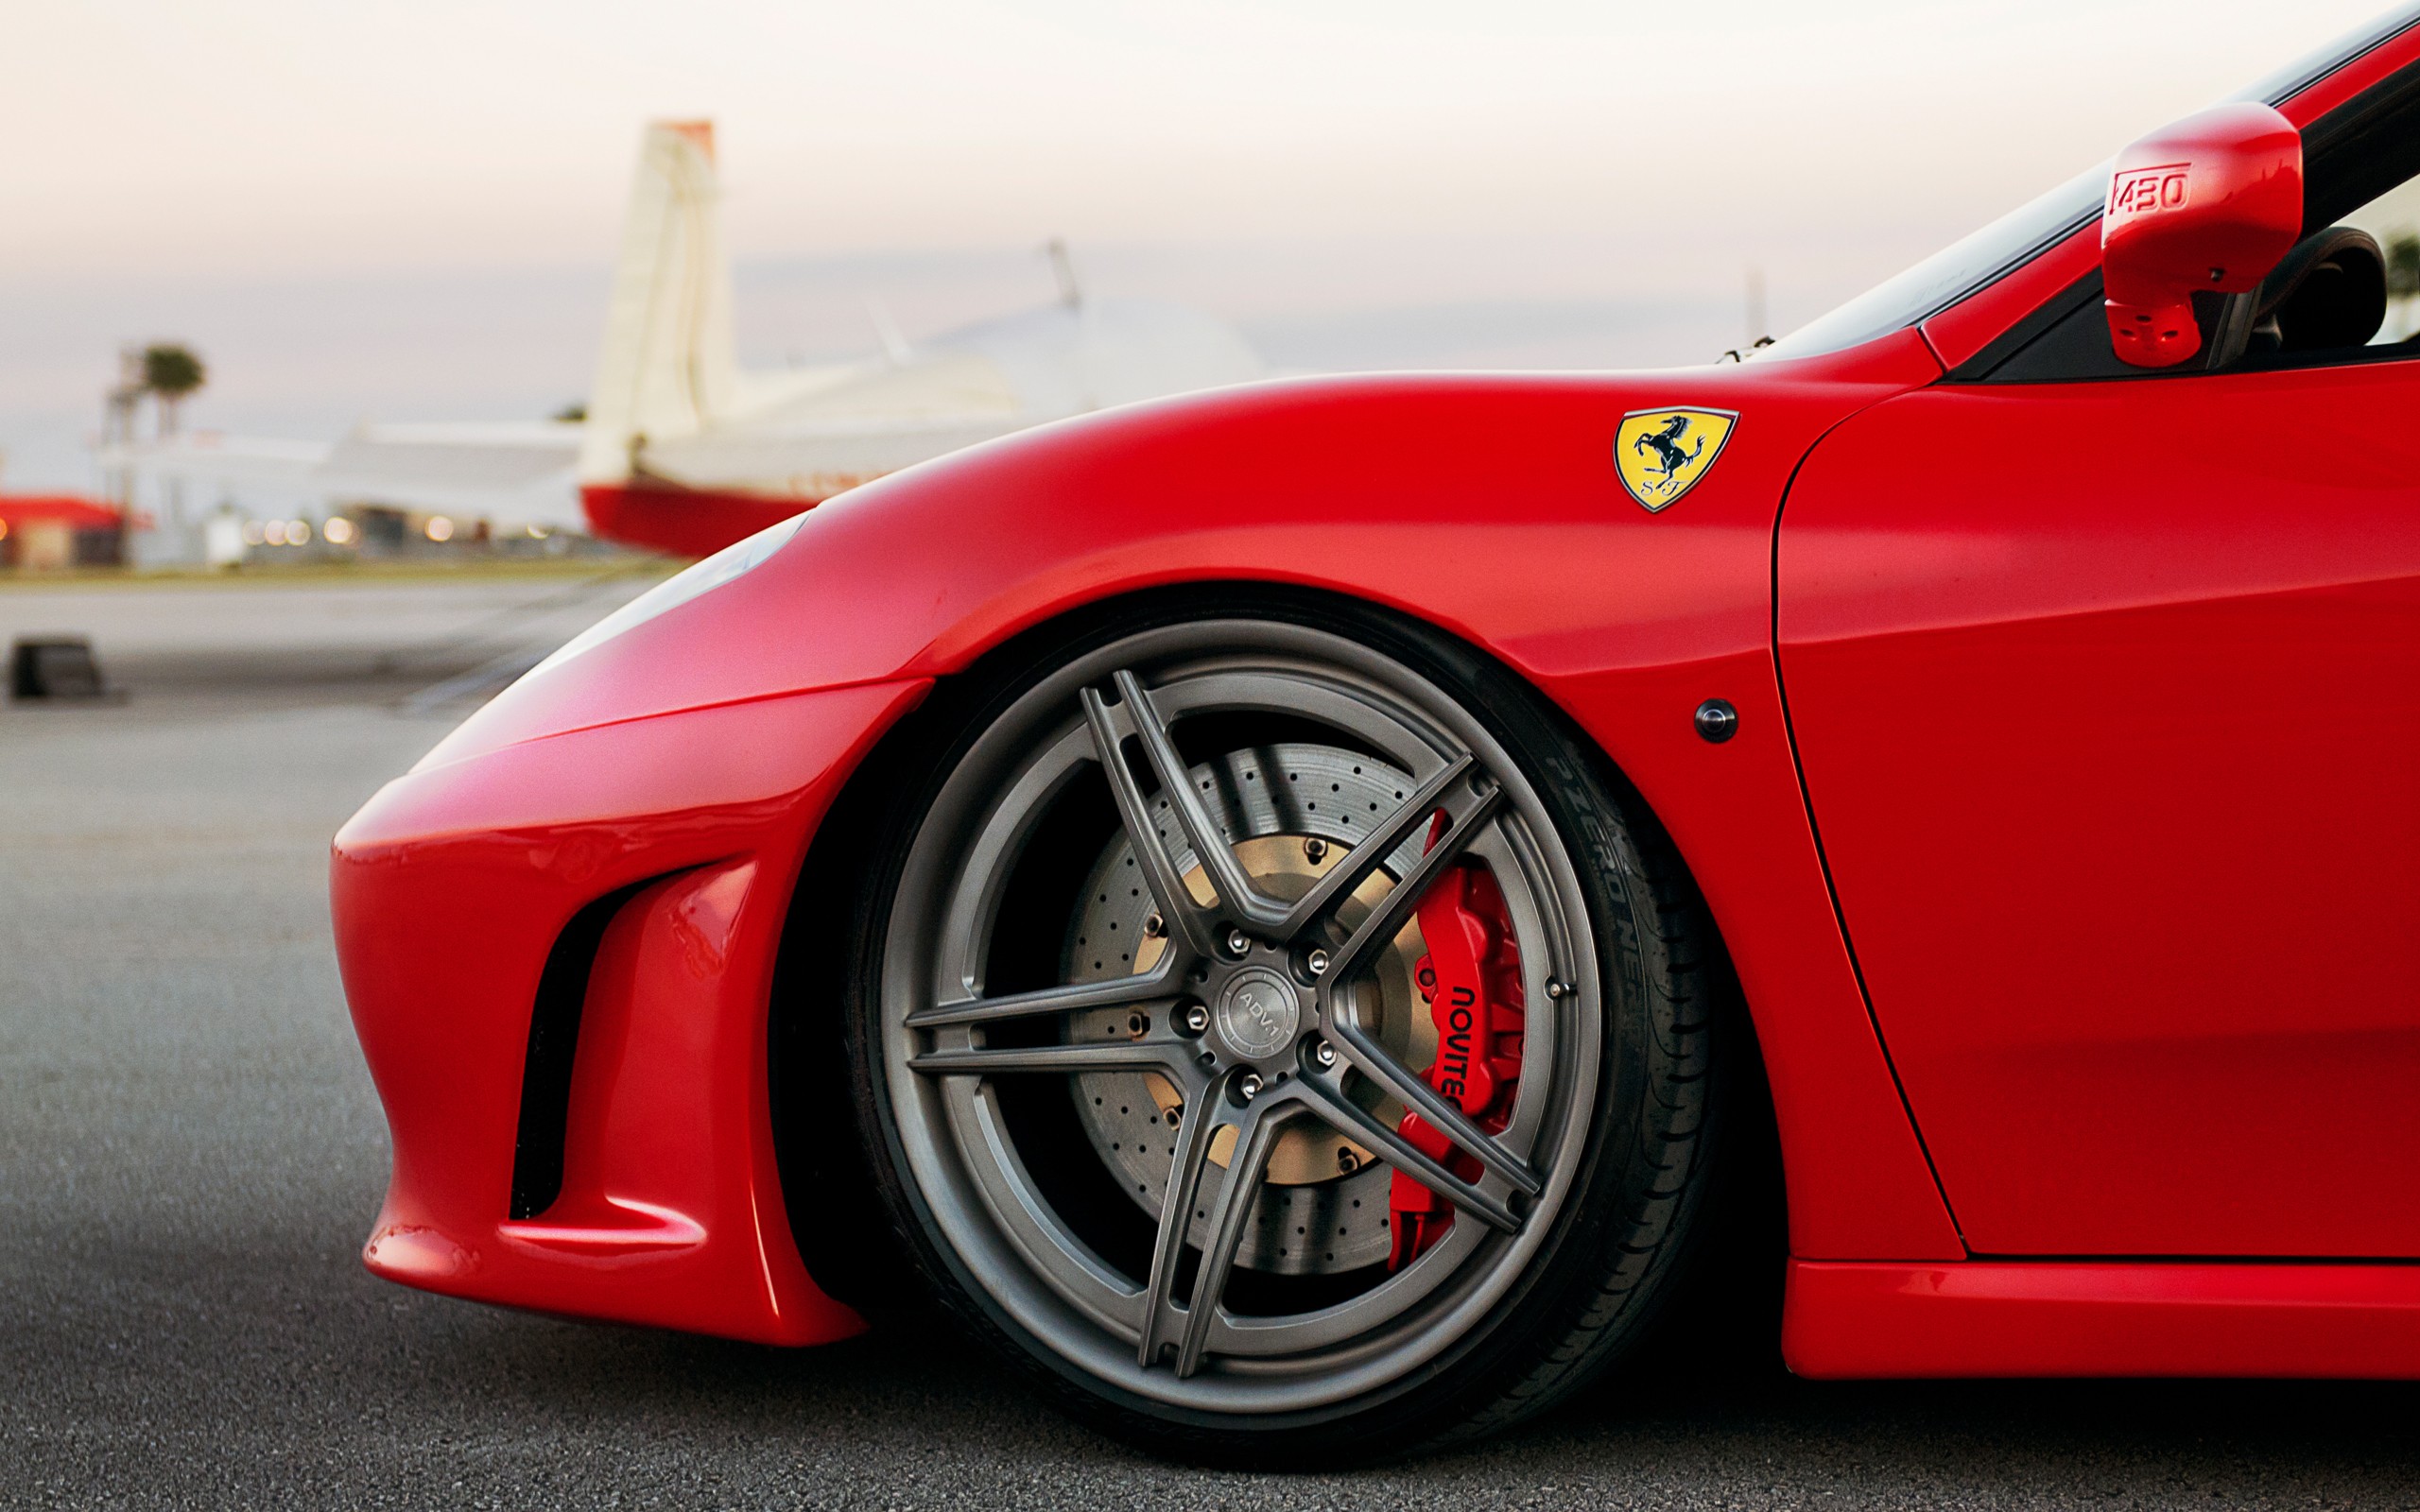 General 2560x1600 car Ferrari Ferrari F430 red cars vehicle italian cars Stellantis